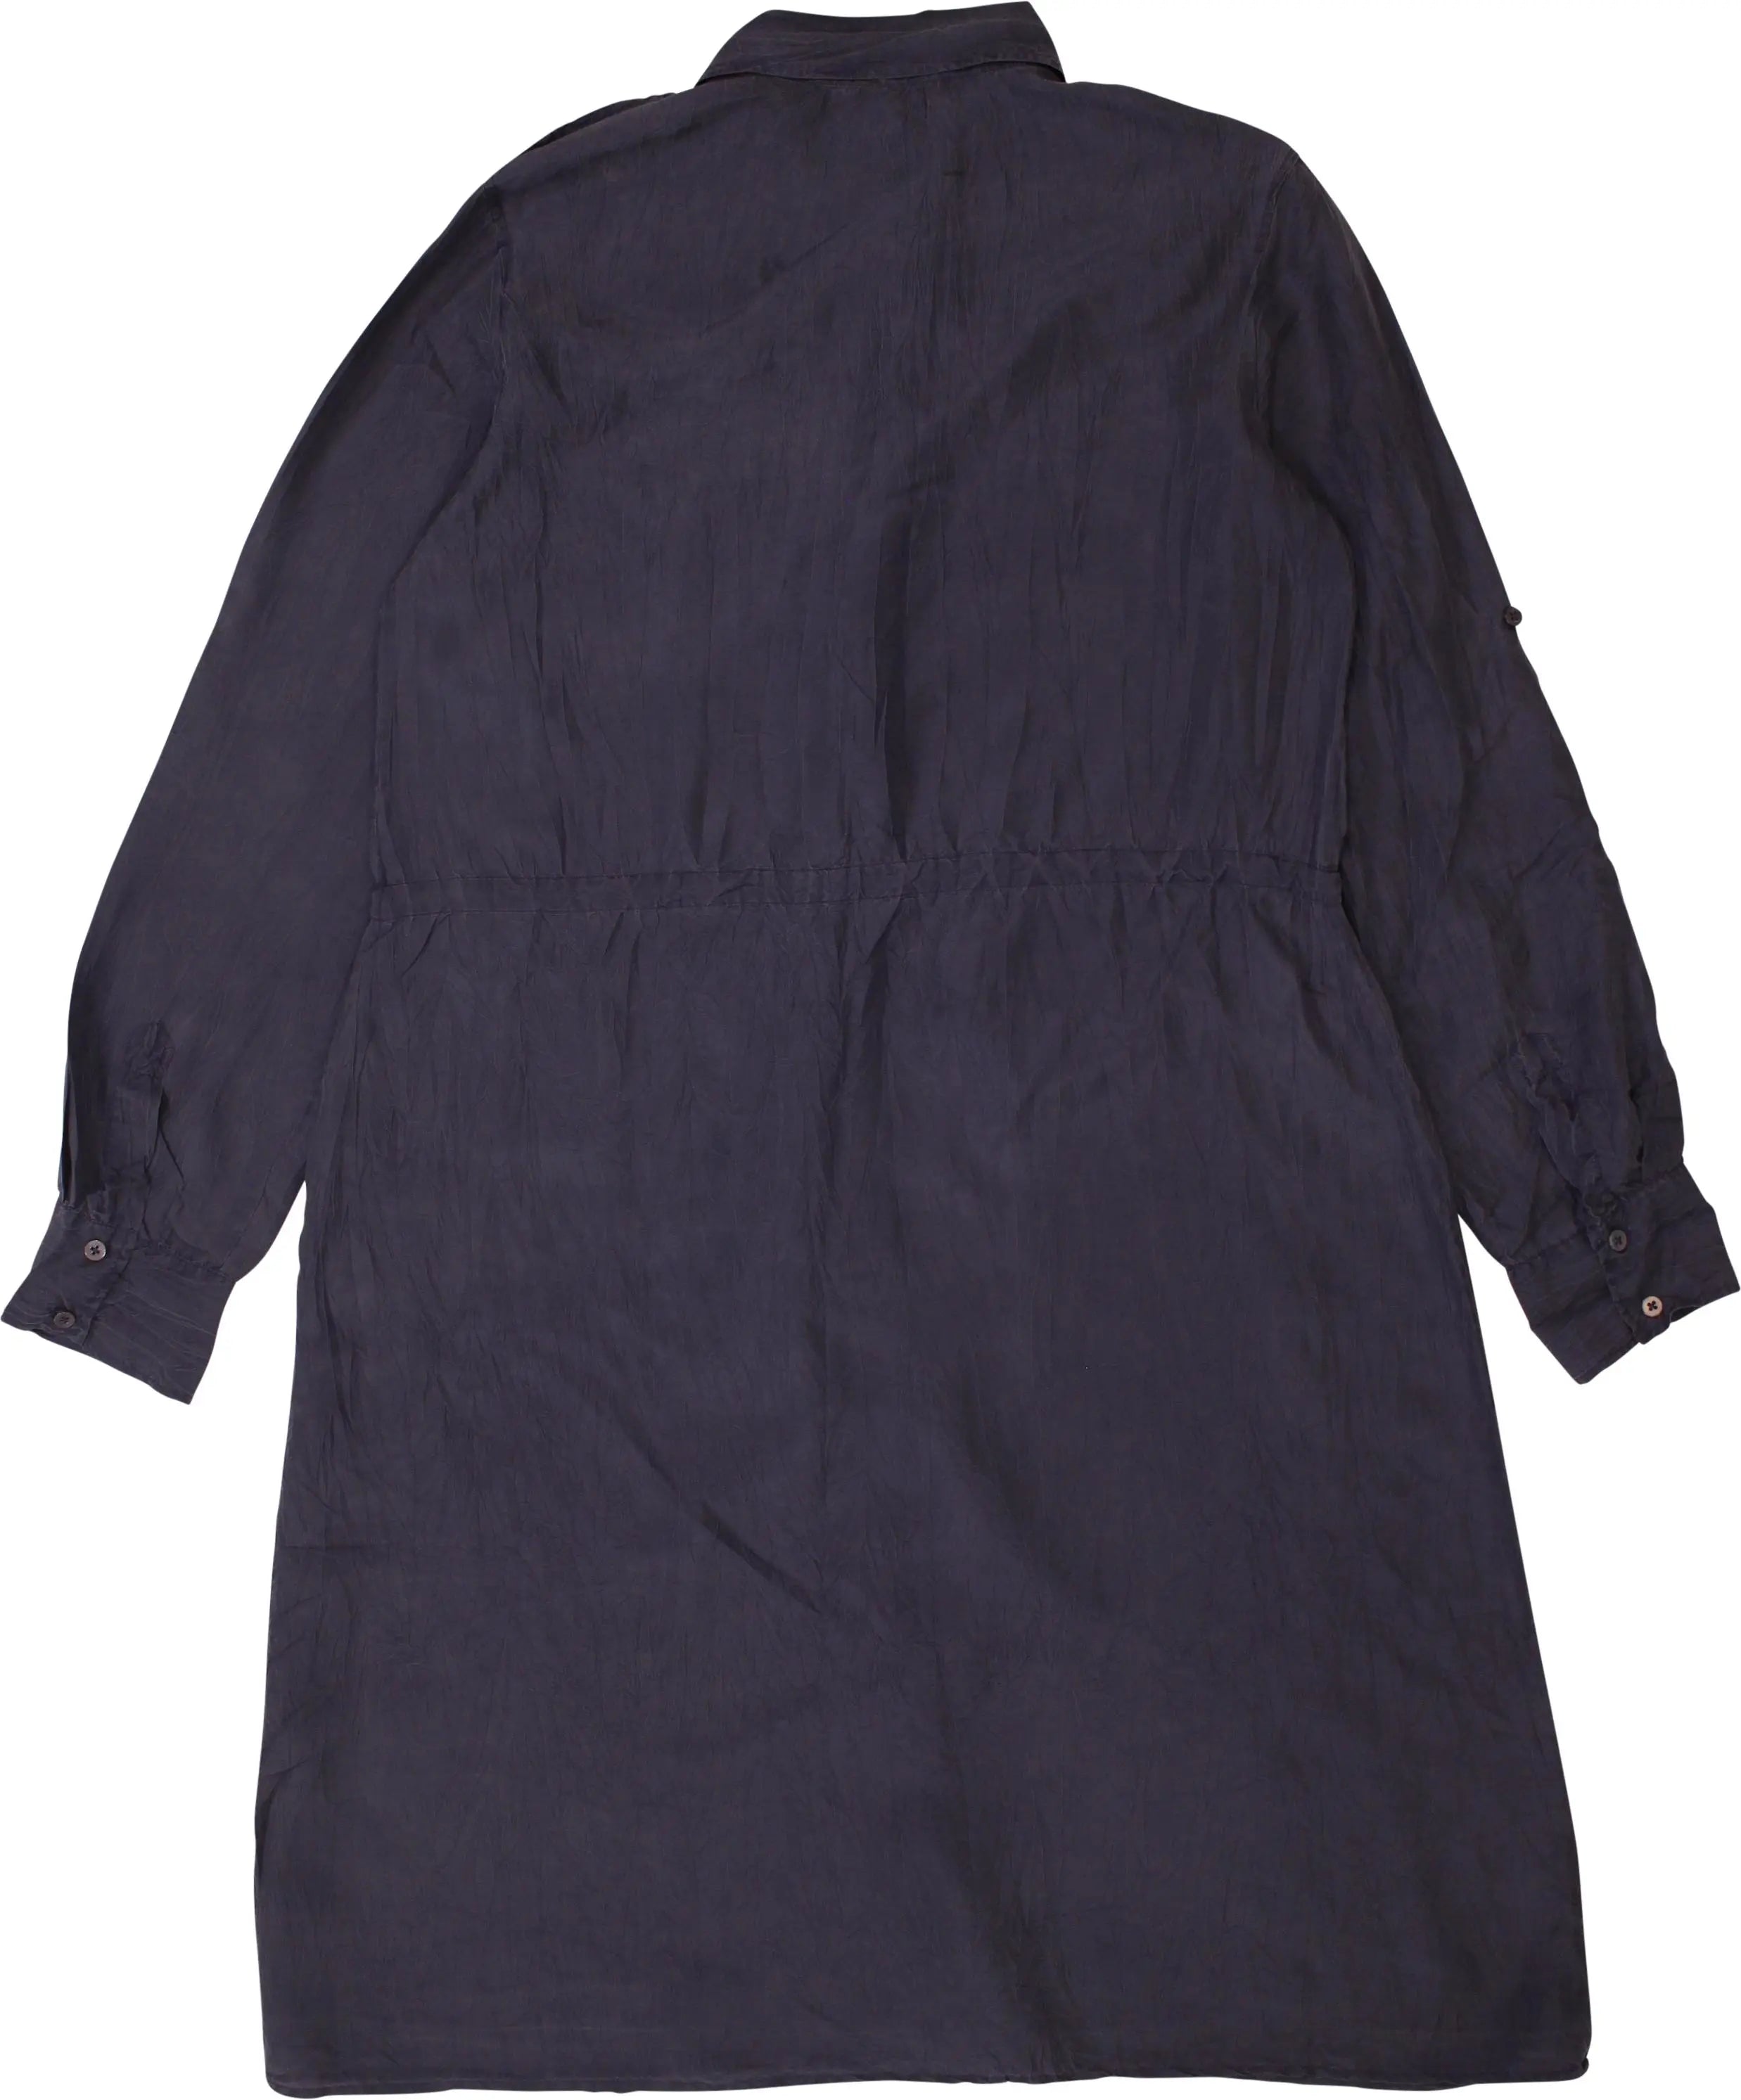 Gerard Darel - Grey Silk Dress by Gerard Darel- ThriftTale.com - Vintage and second handclothing